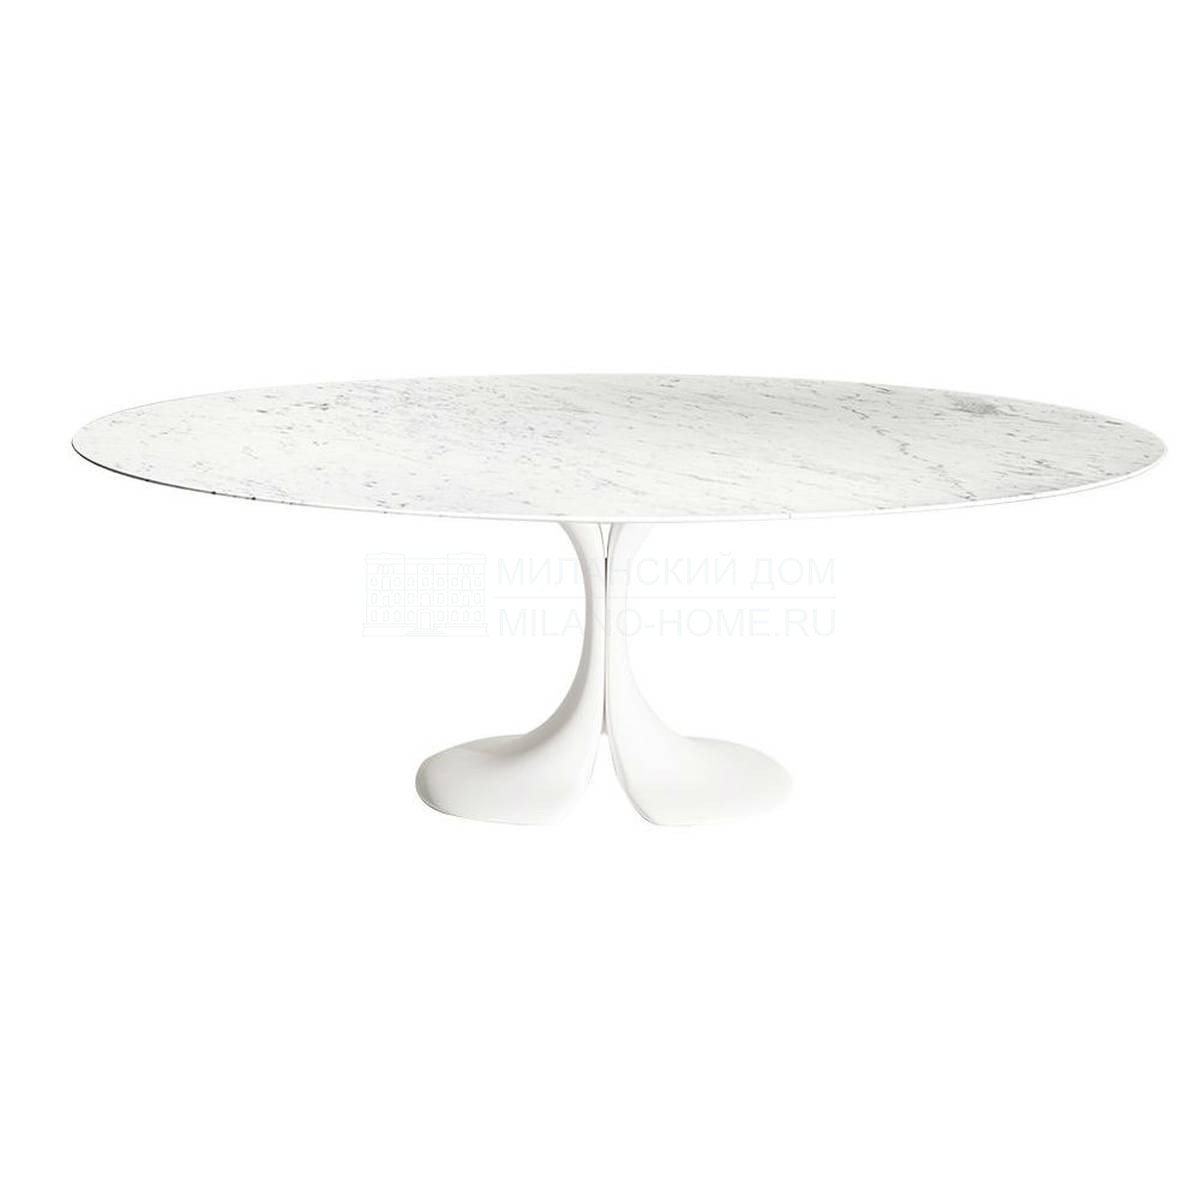 Круглый стол Didymos table из Италии фабрики DRIADE